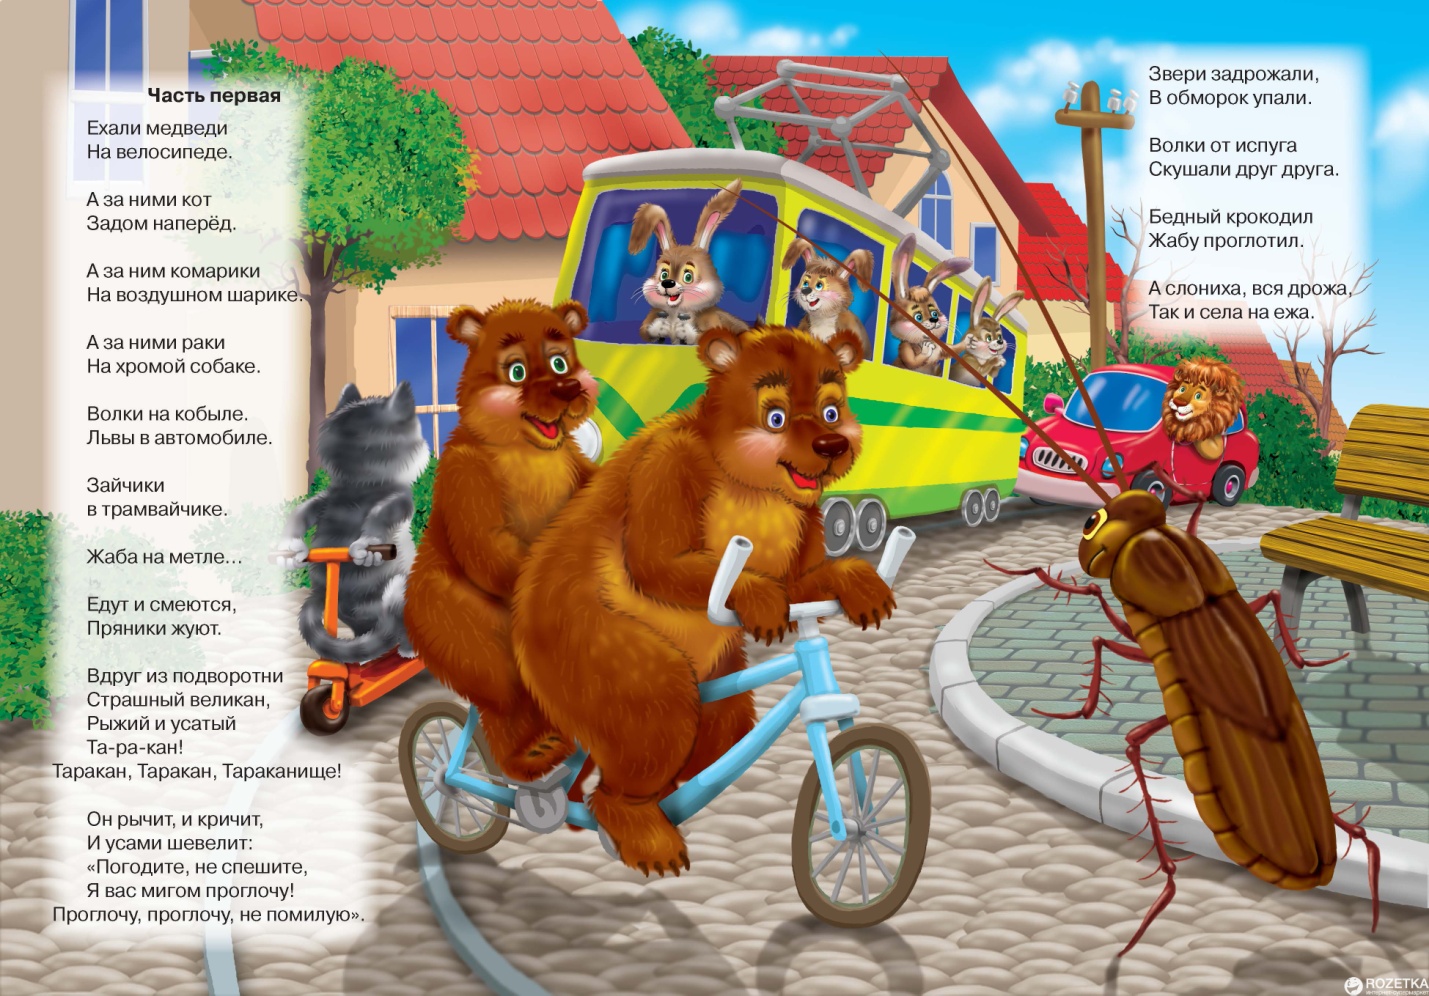 Таракан тараканище ехали медведи на велосипеде. Ехали медведи на велосипеде Чуковский. Стих Чуковского ехали медведи. Чуковский иллюстрации ехали медведи.